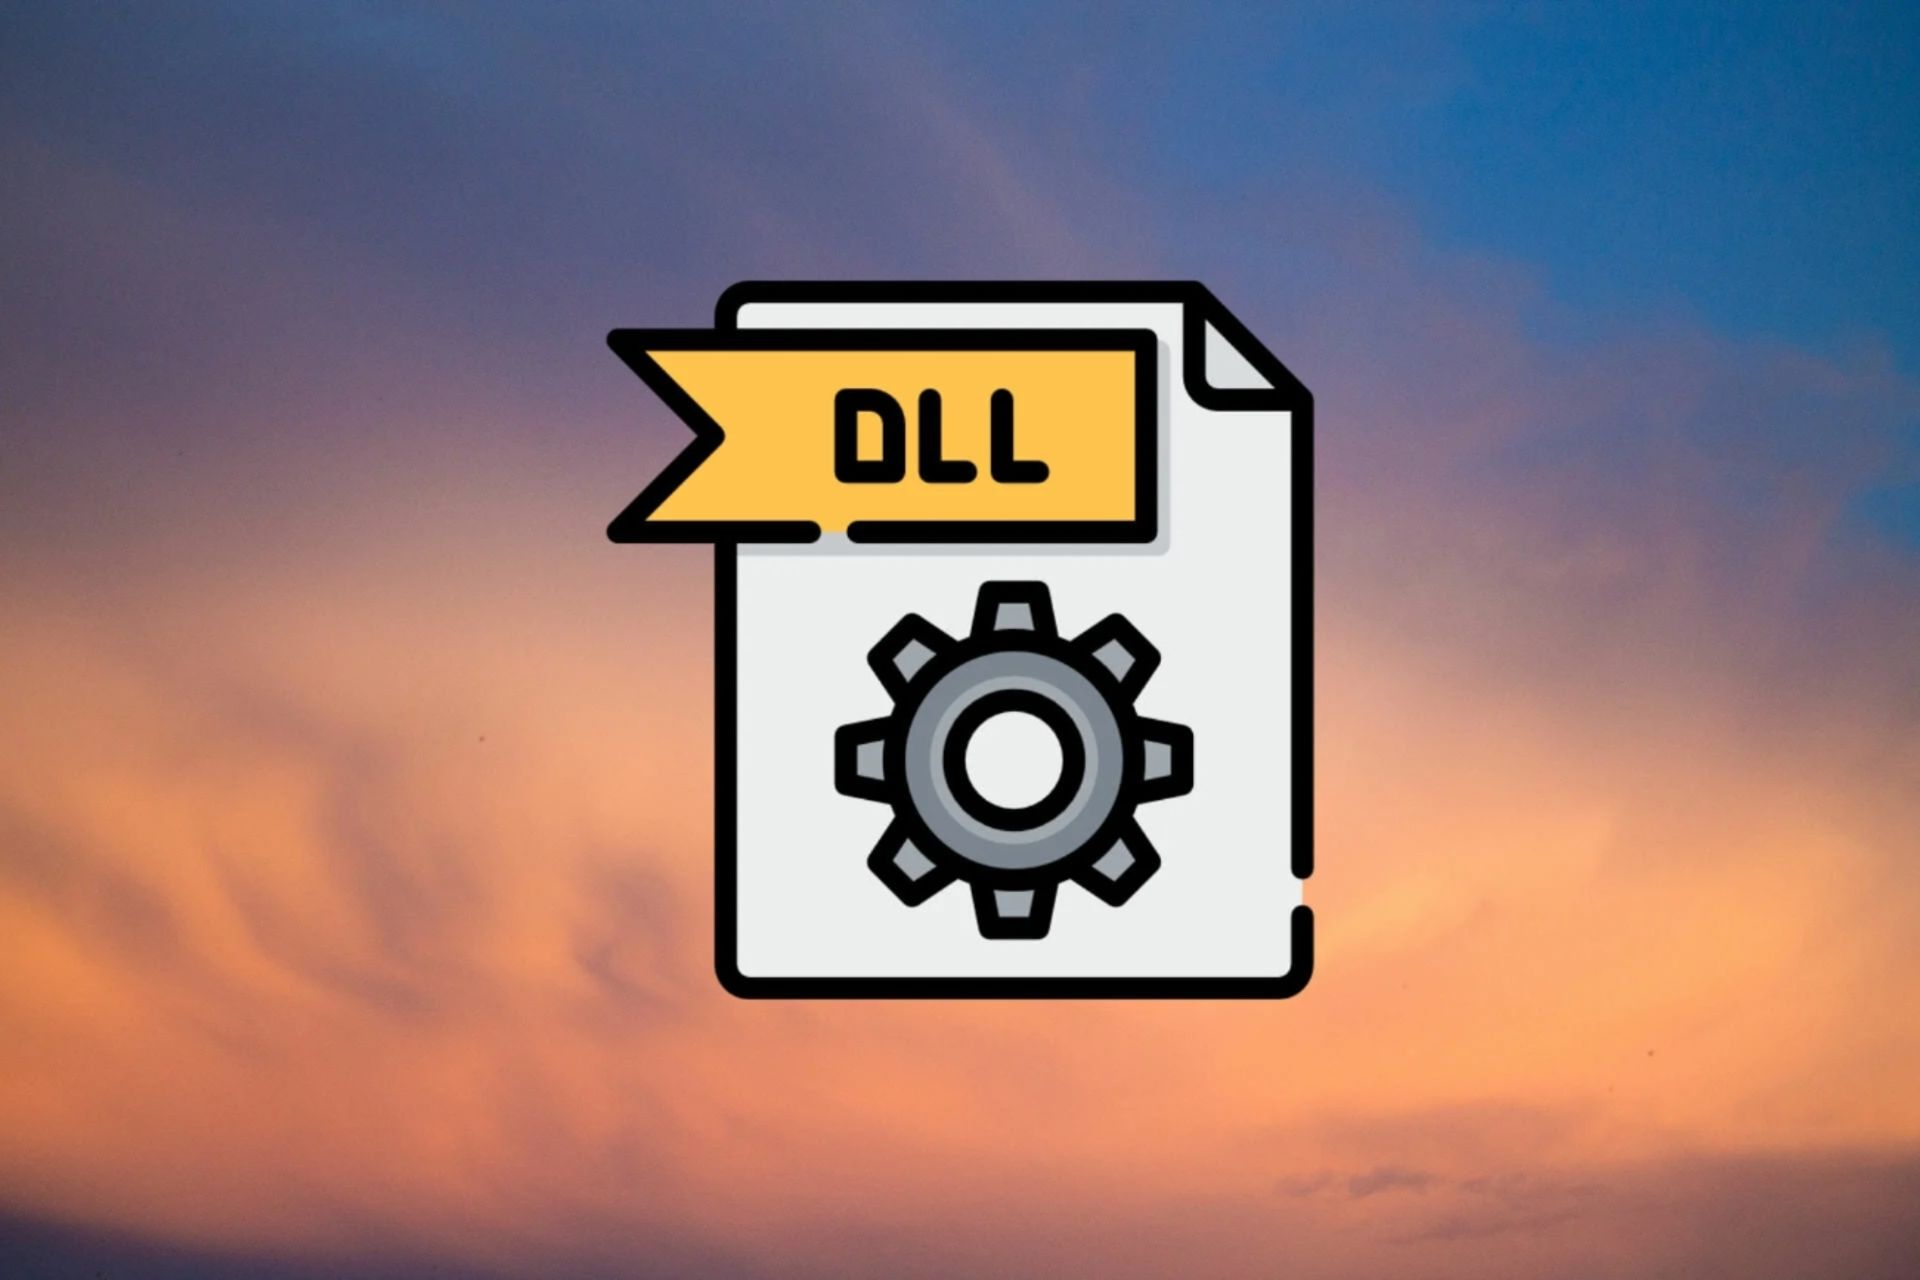 فایل DLL در پس‌زمینه آسمان آبی نارنجی